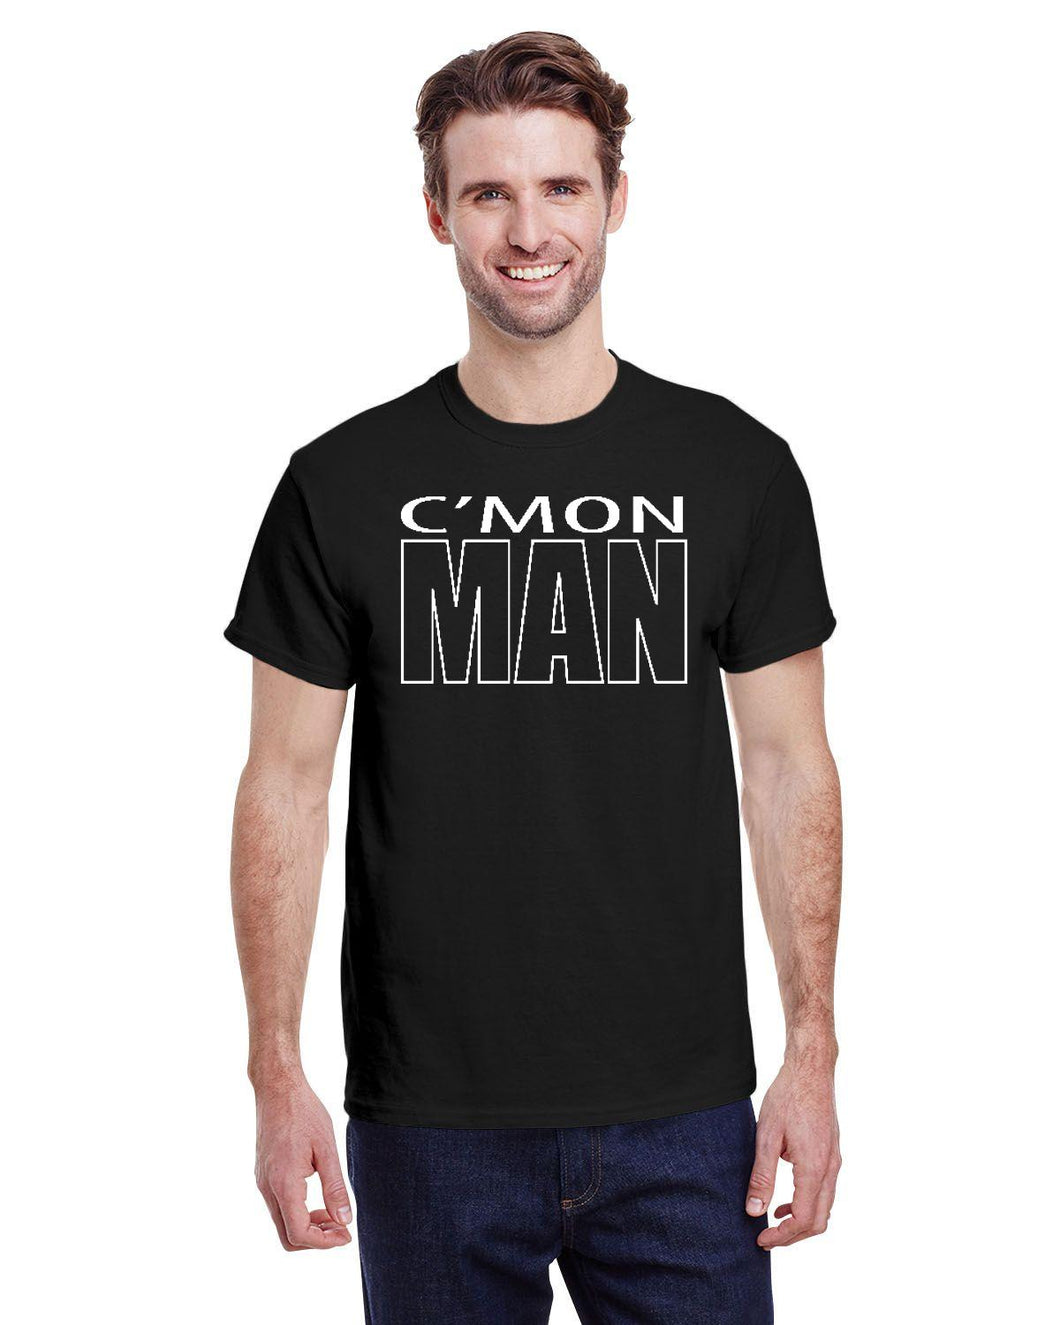 C'mon Man T-shirt